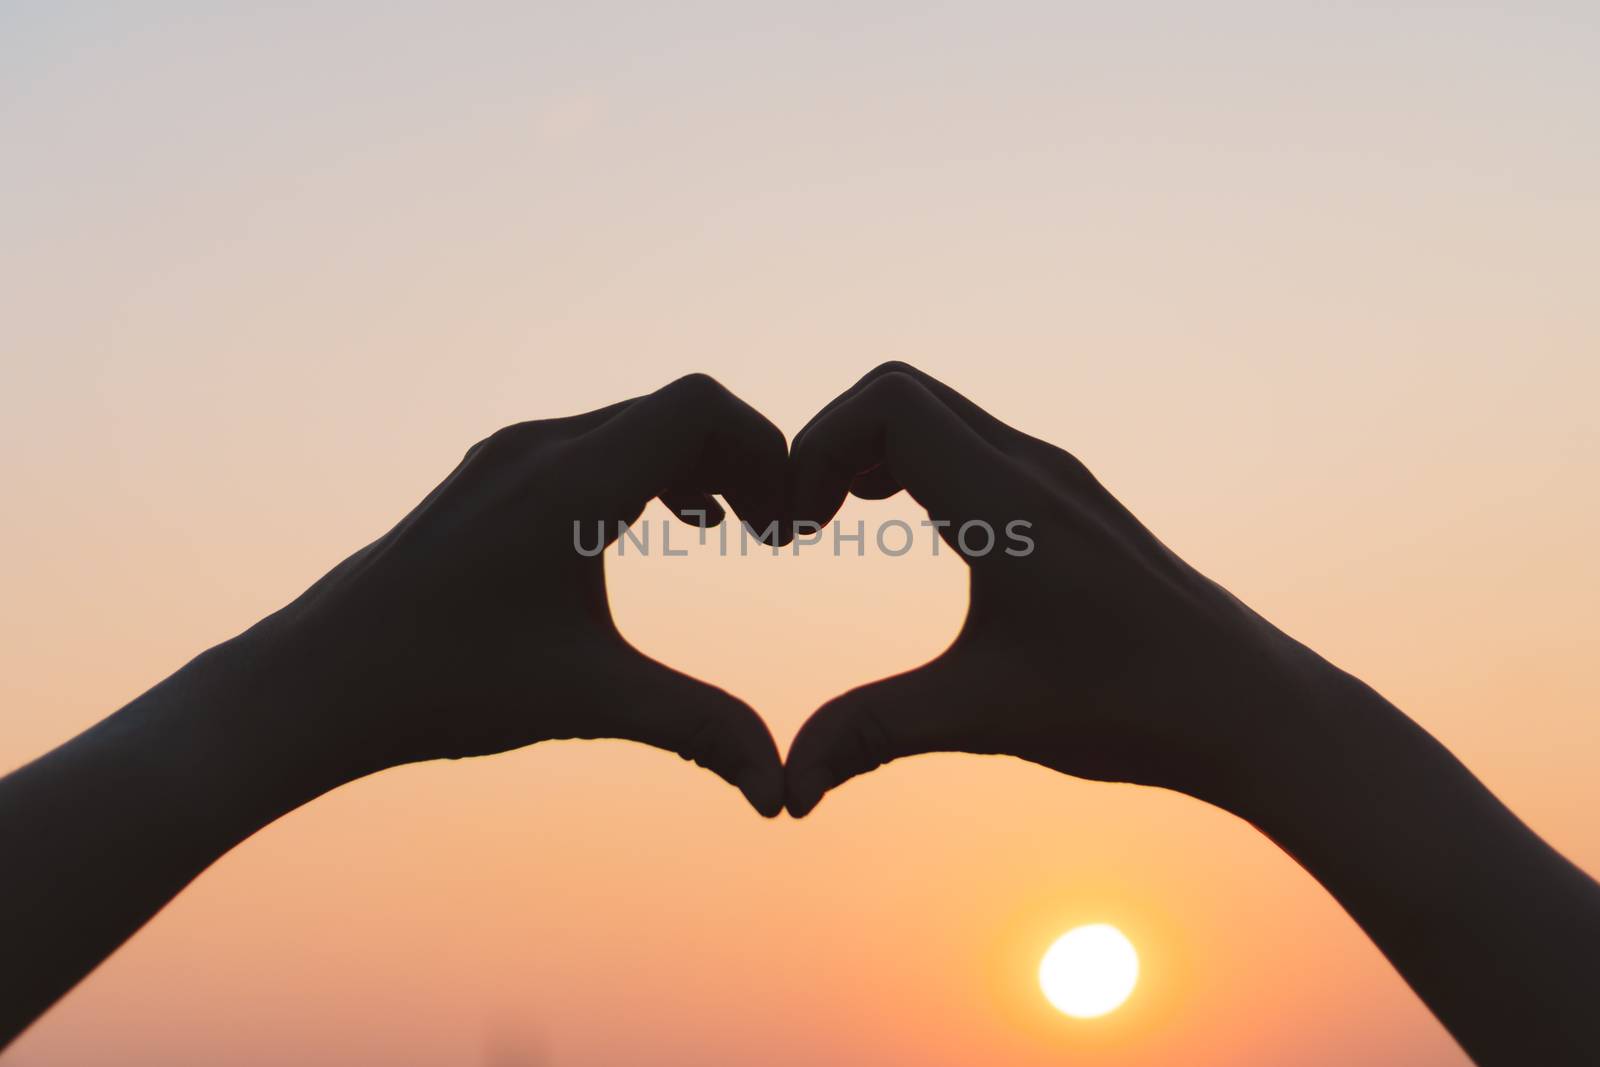 Woman hand do heart shape on sunset sky and bokeh background.